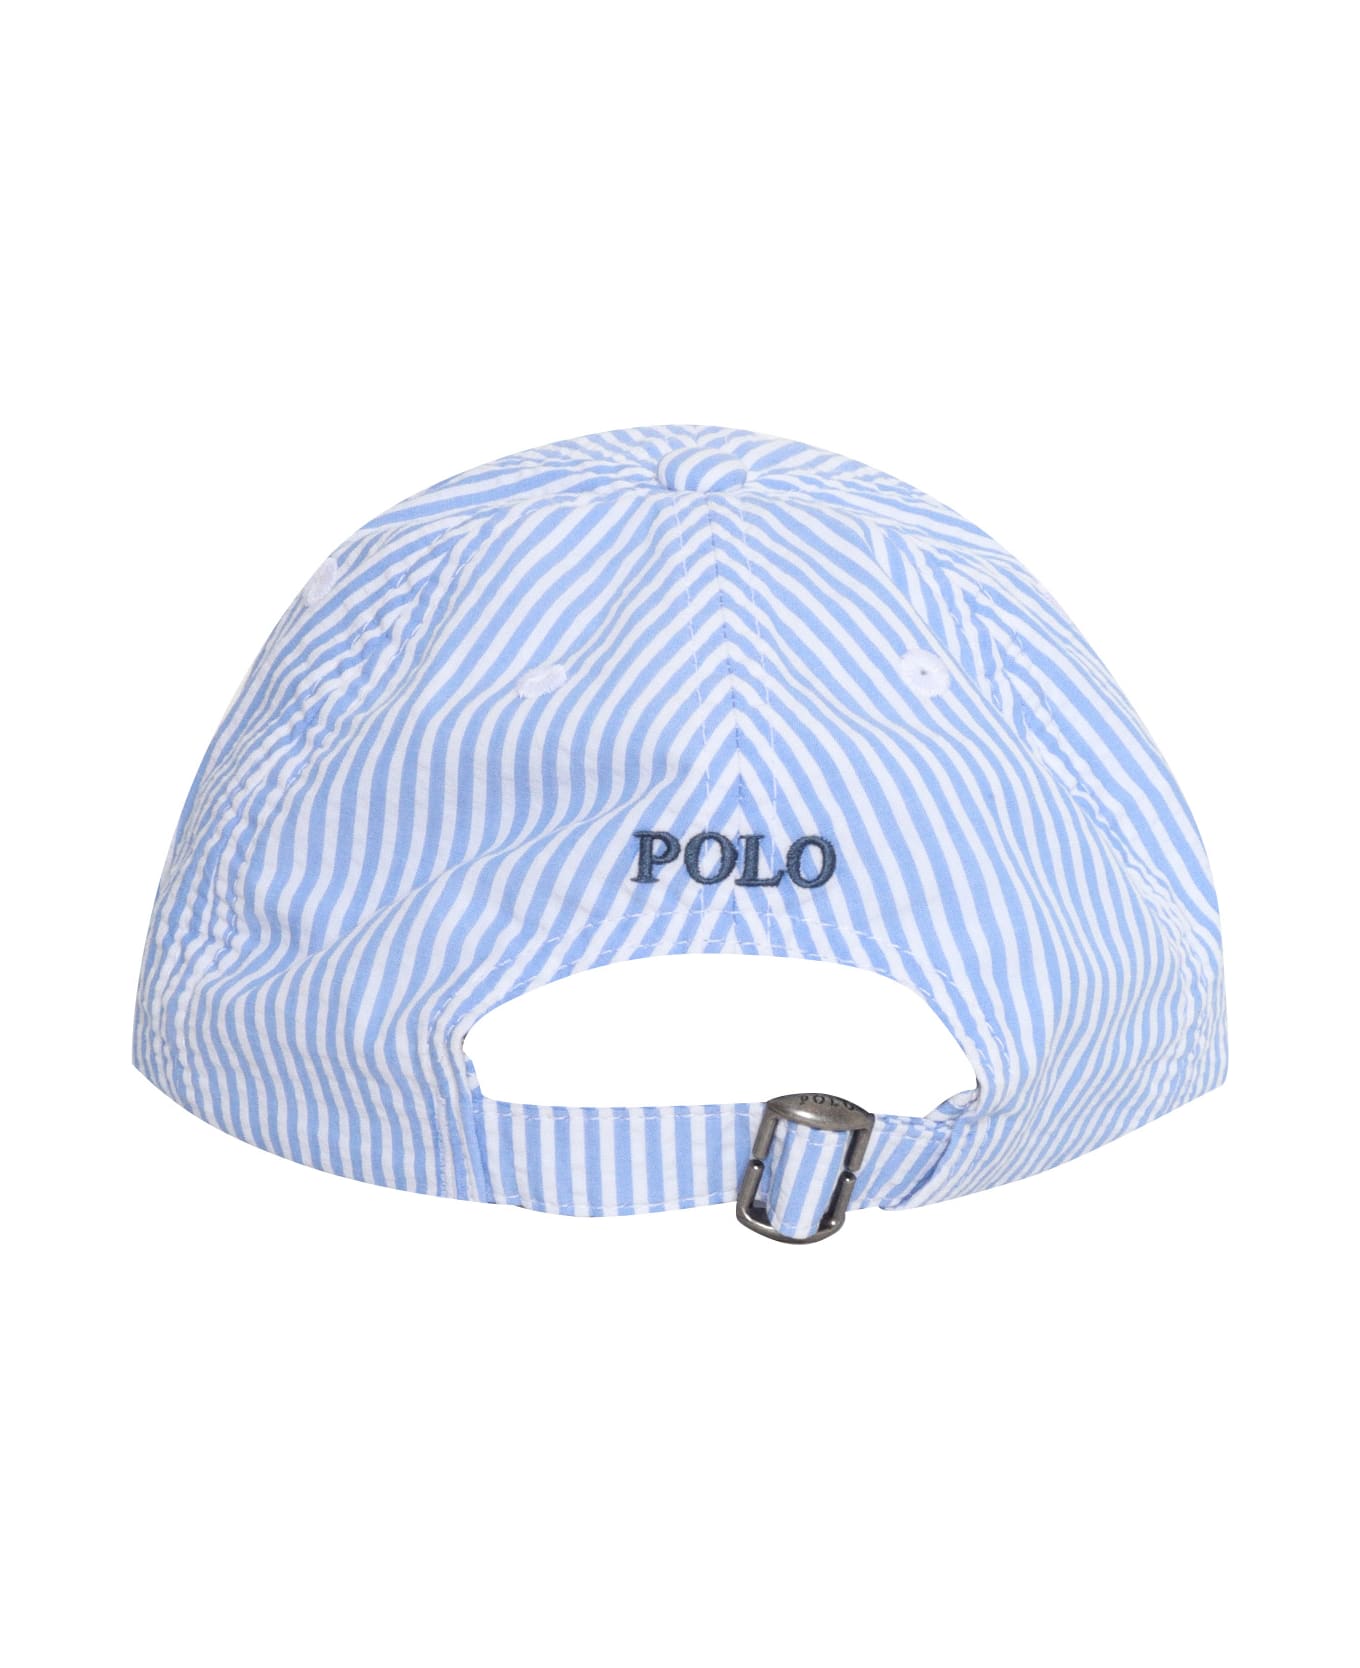 Polo Ralph Lauren Striped Cap With Logo - BLUE